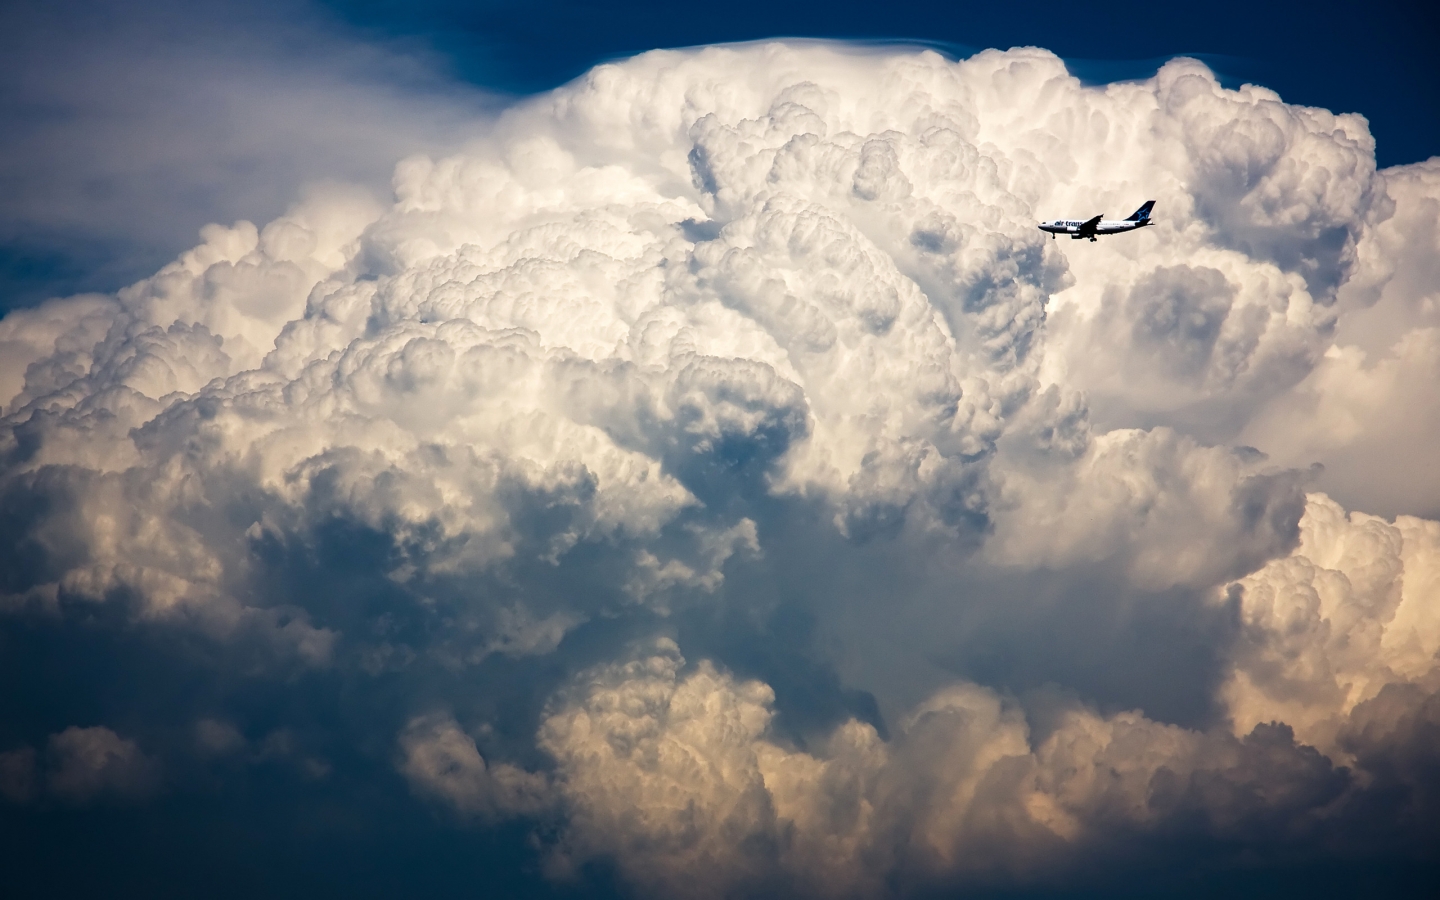 Air Transat vs Storm Cloud for 1440 x 900 widescreen resolution